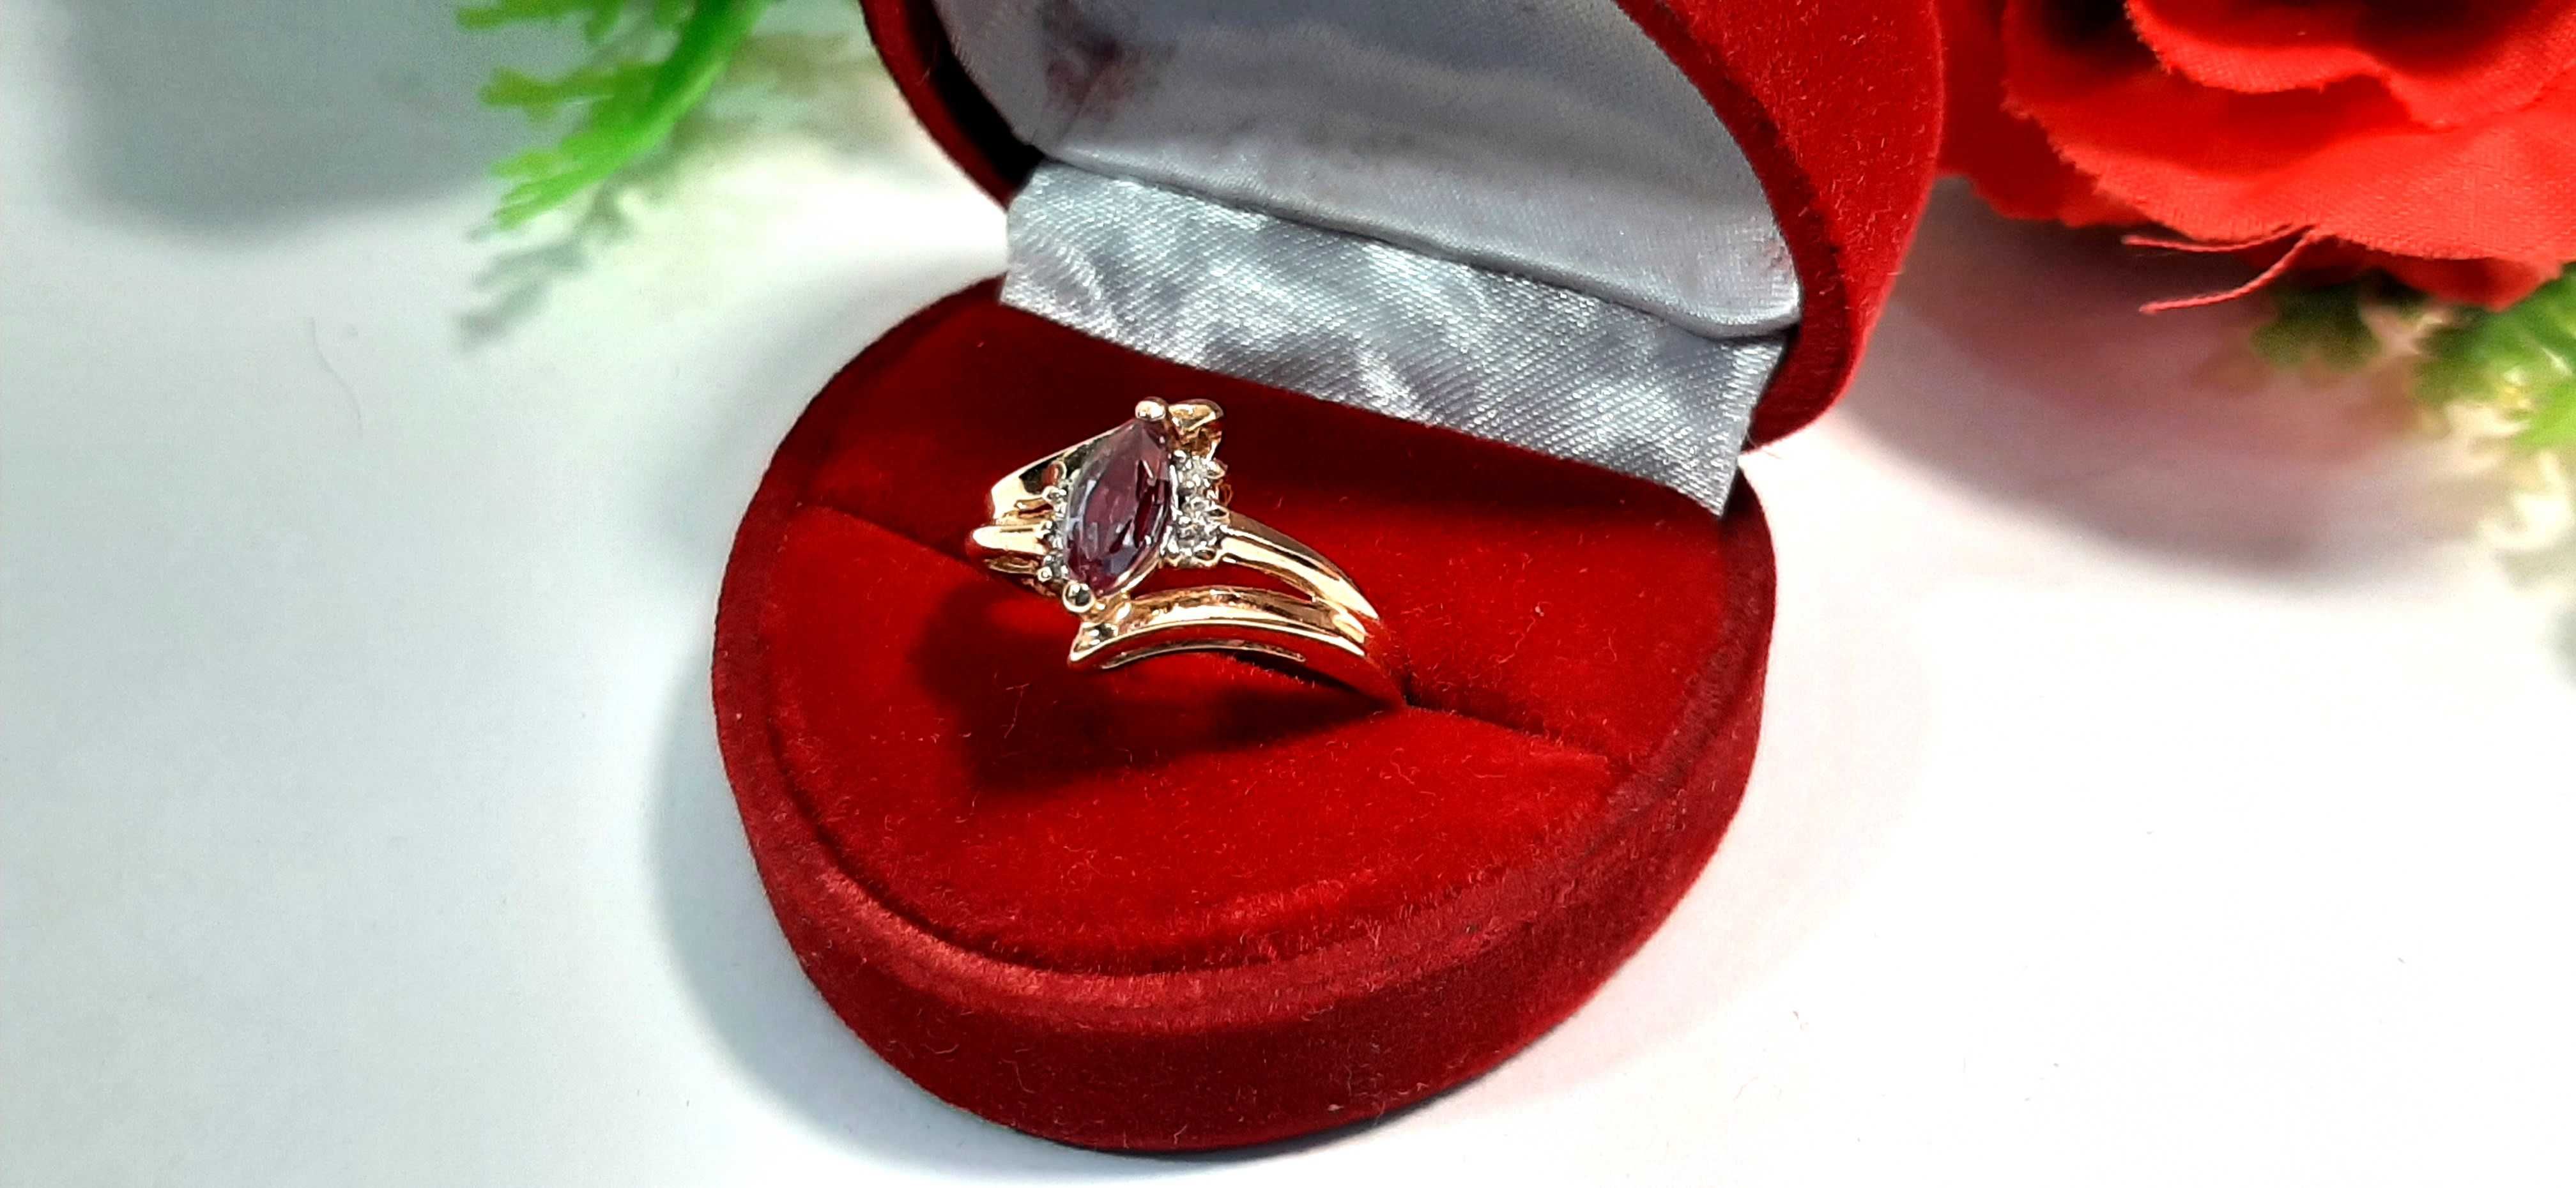 Piękny pierścionek z diamentami 2,83 g 585 + certyfikat